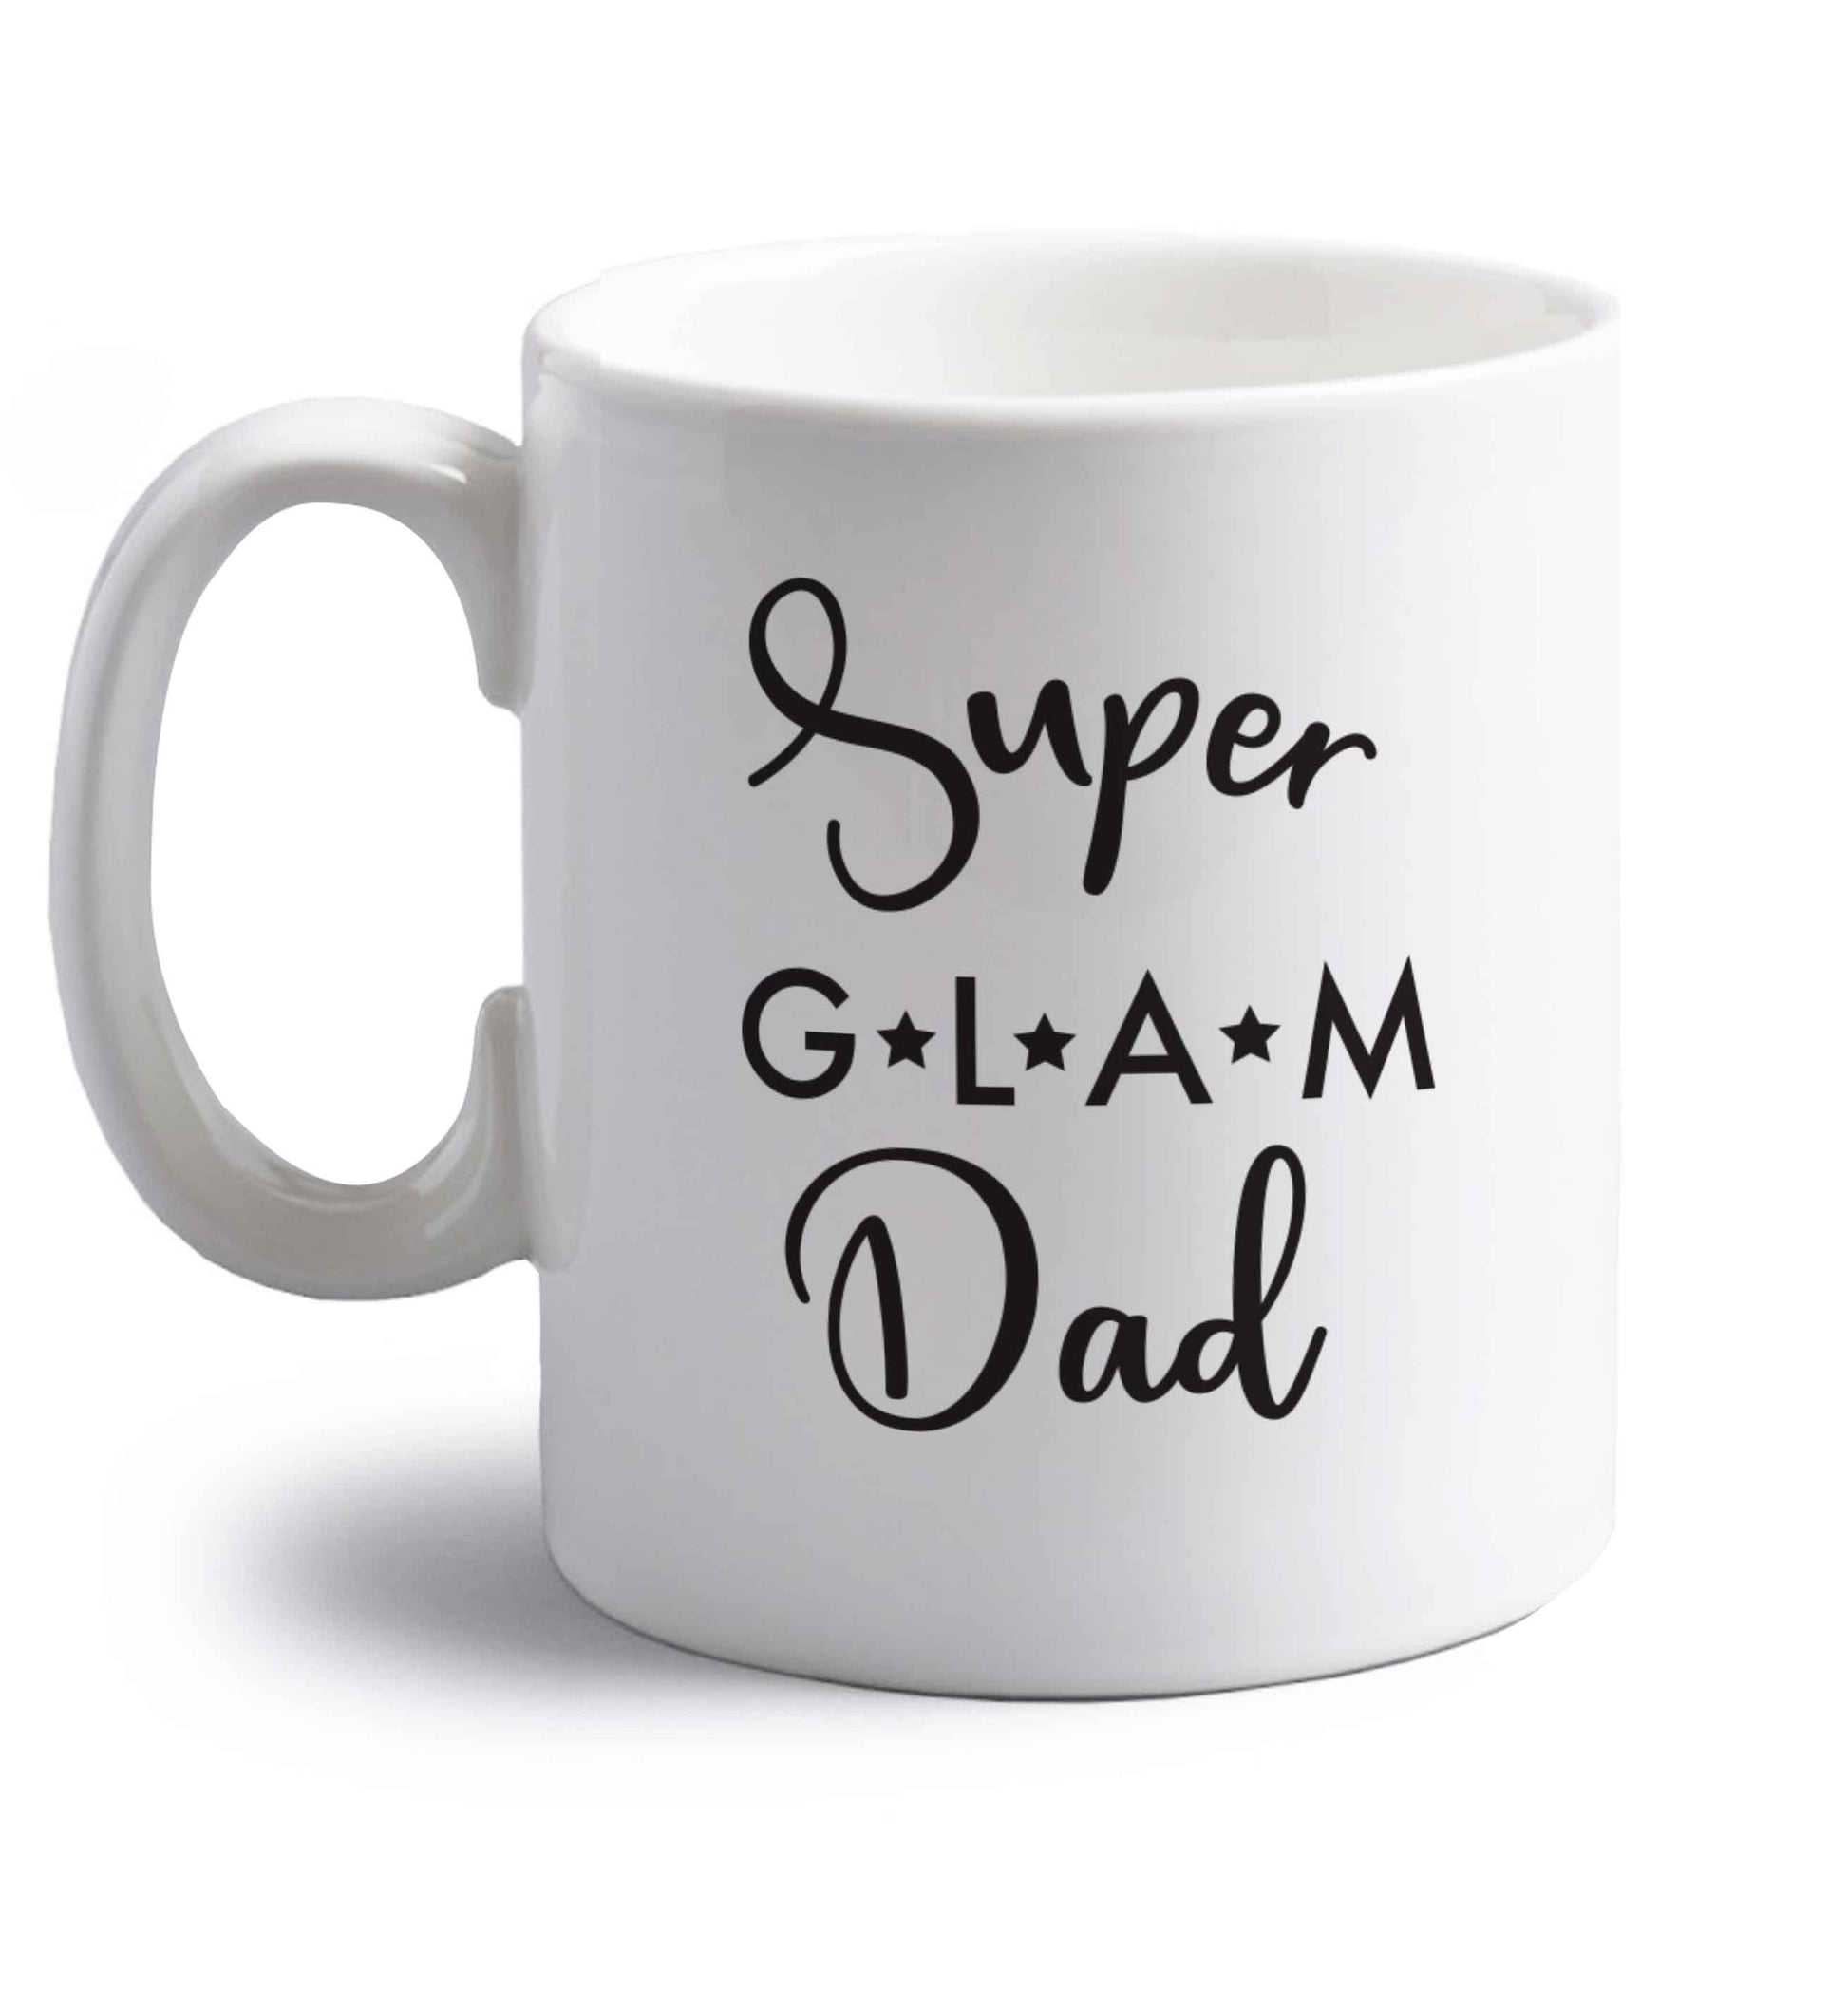 Super glam Dad right handed white ceramic mug 